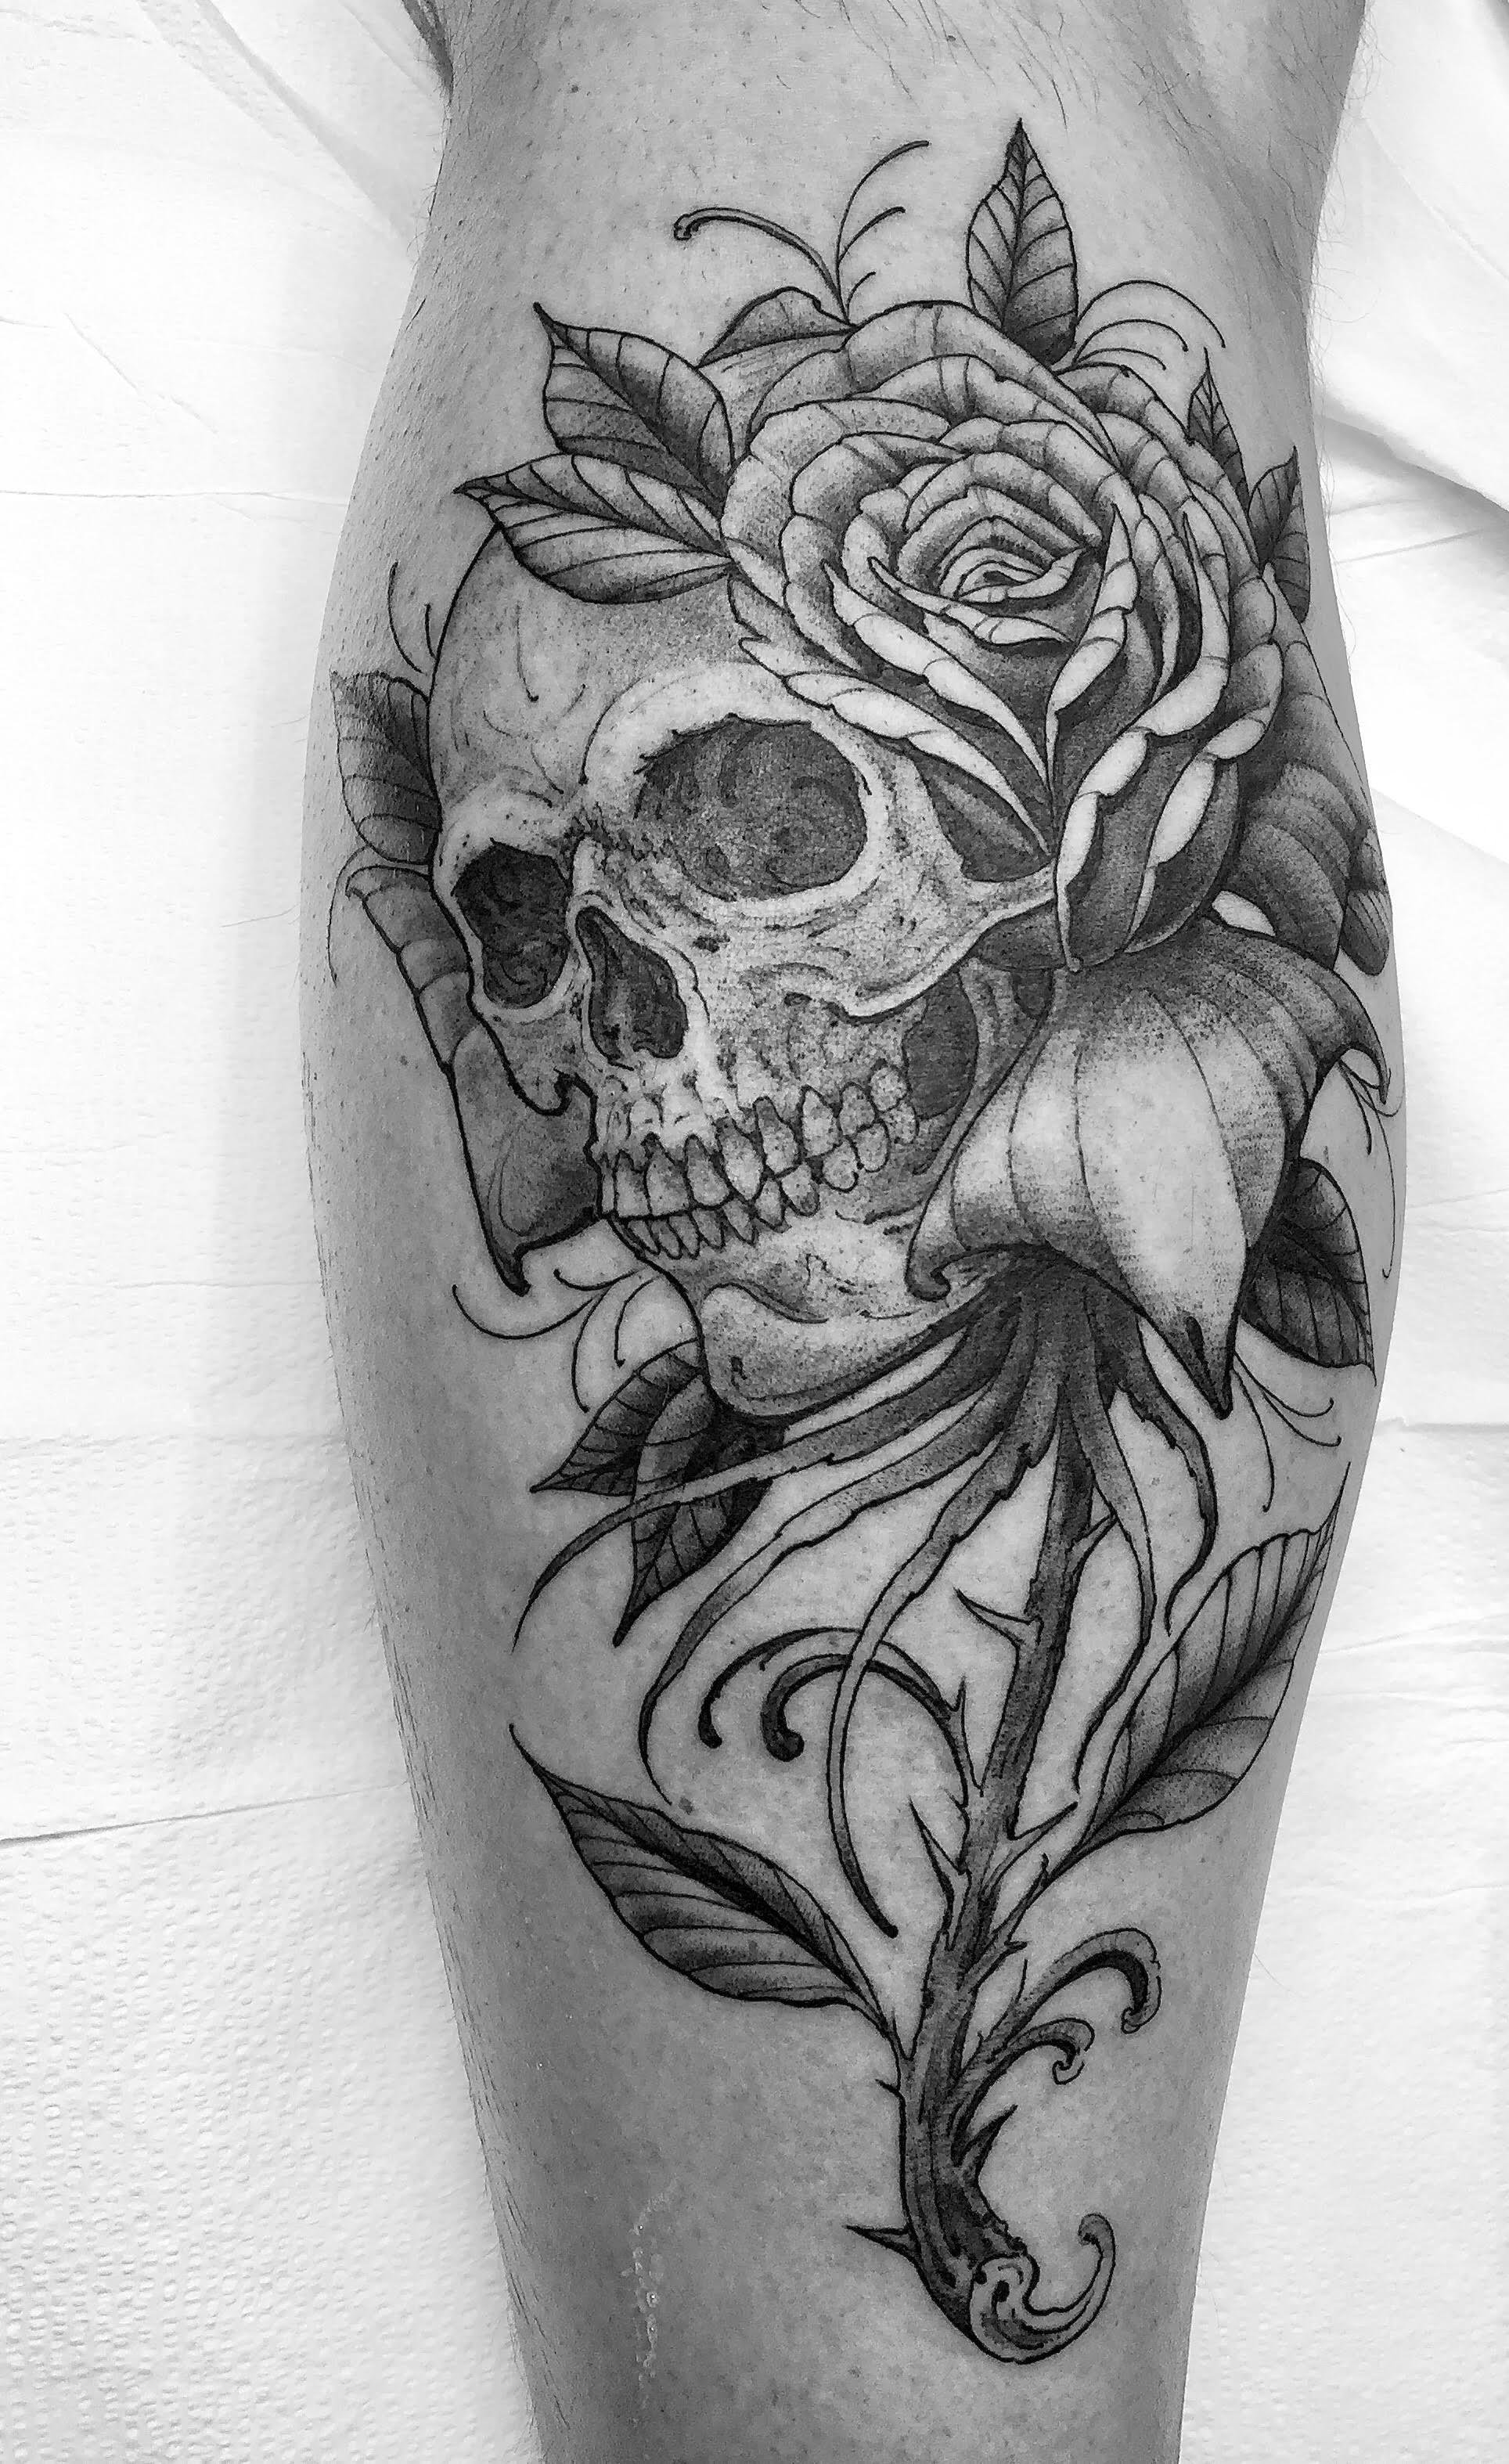 Dave Richardson, Elizabeth Street Tattoo, skull,rose.jpg